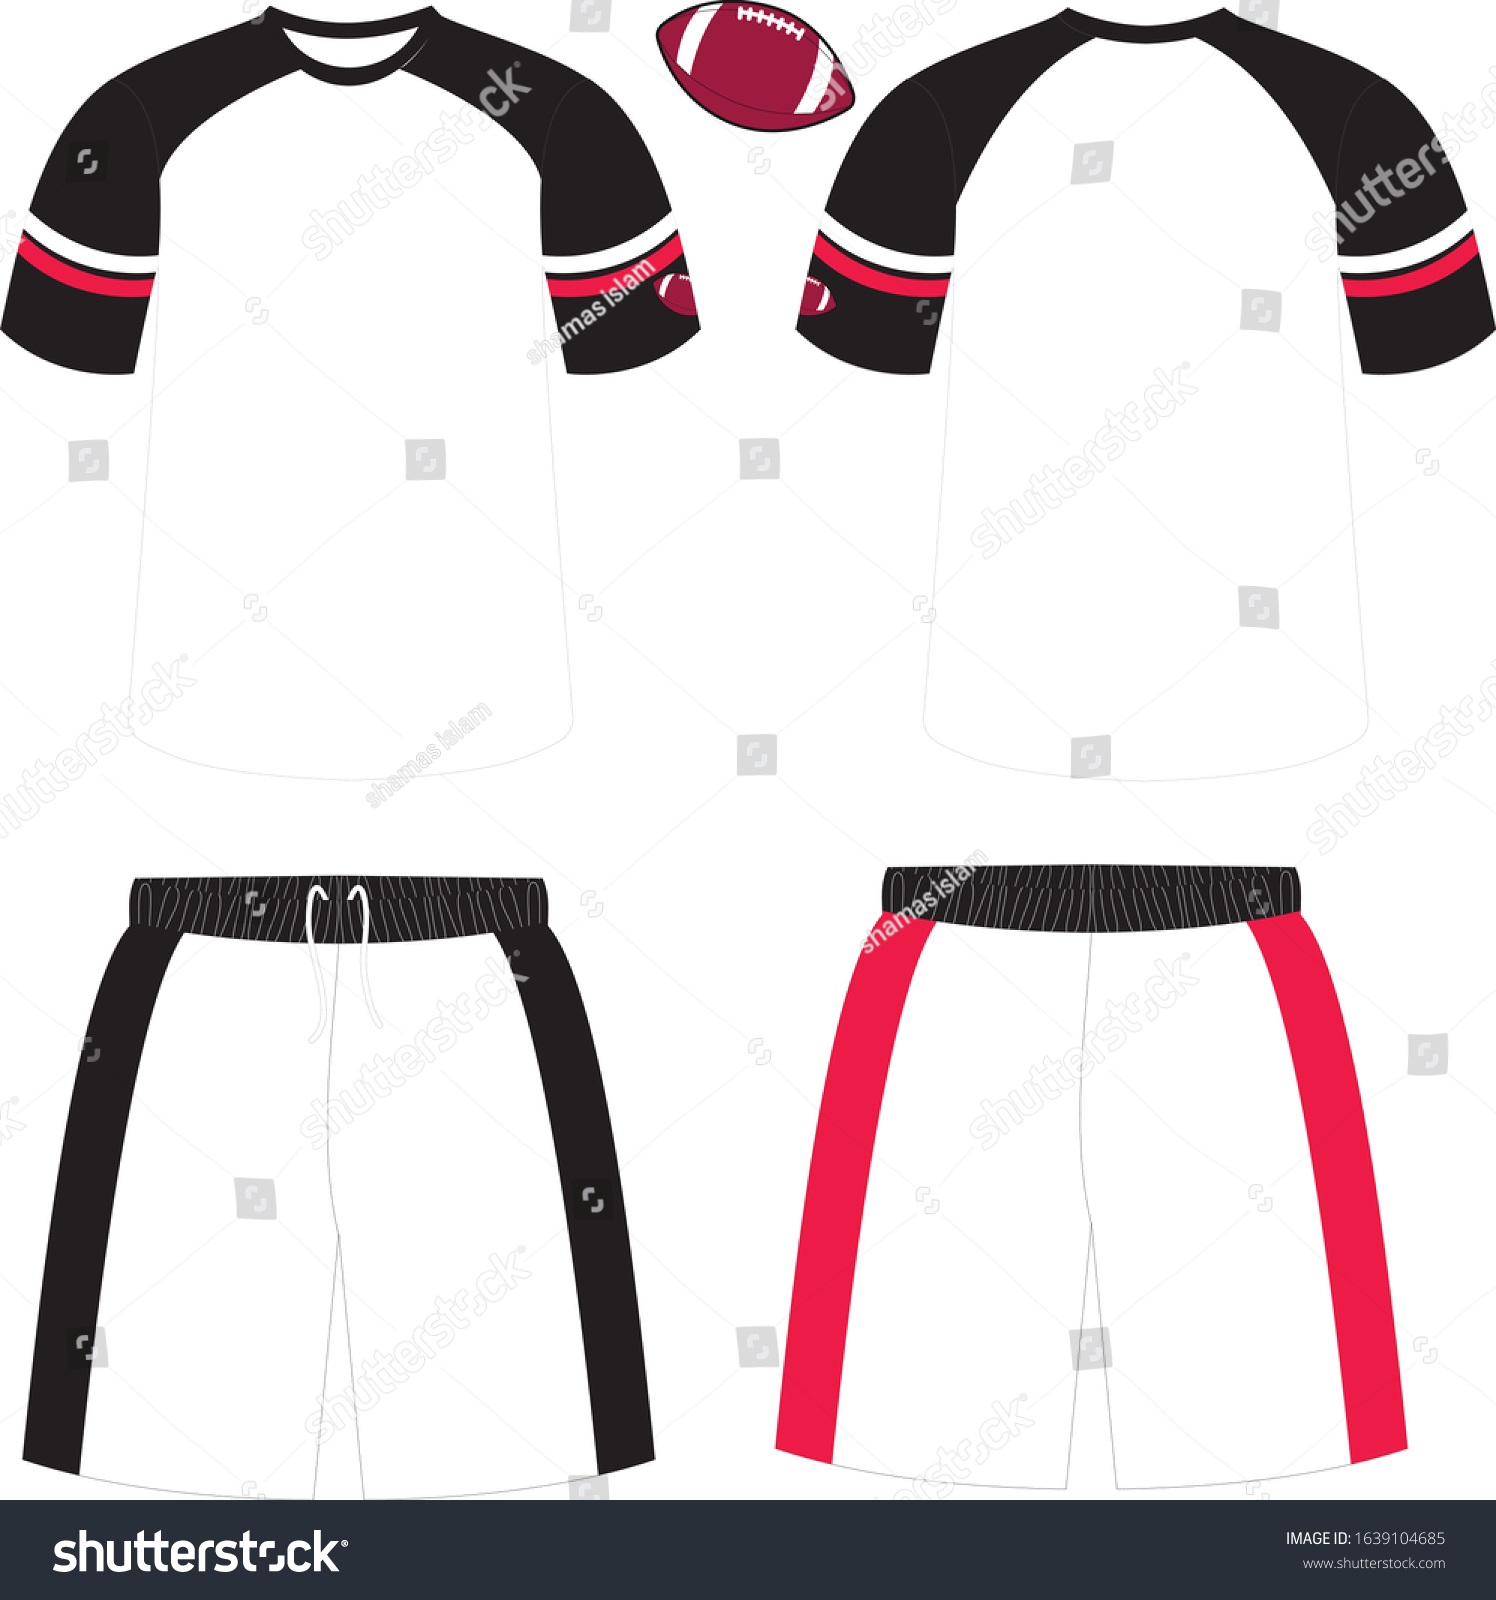 custom flag football uniforms